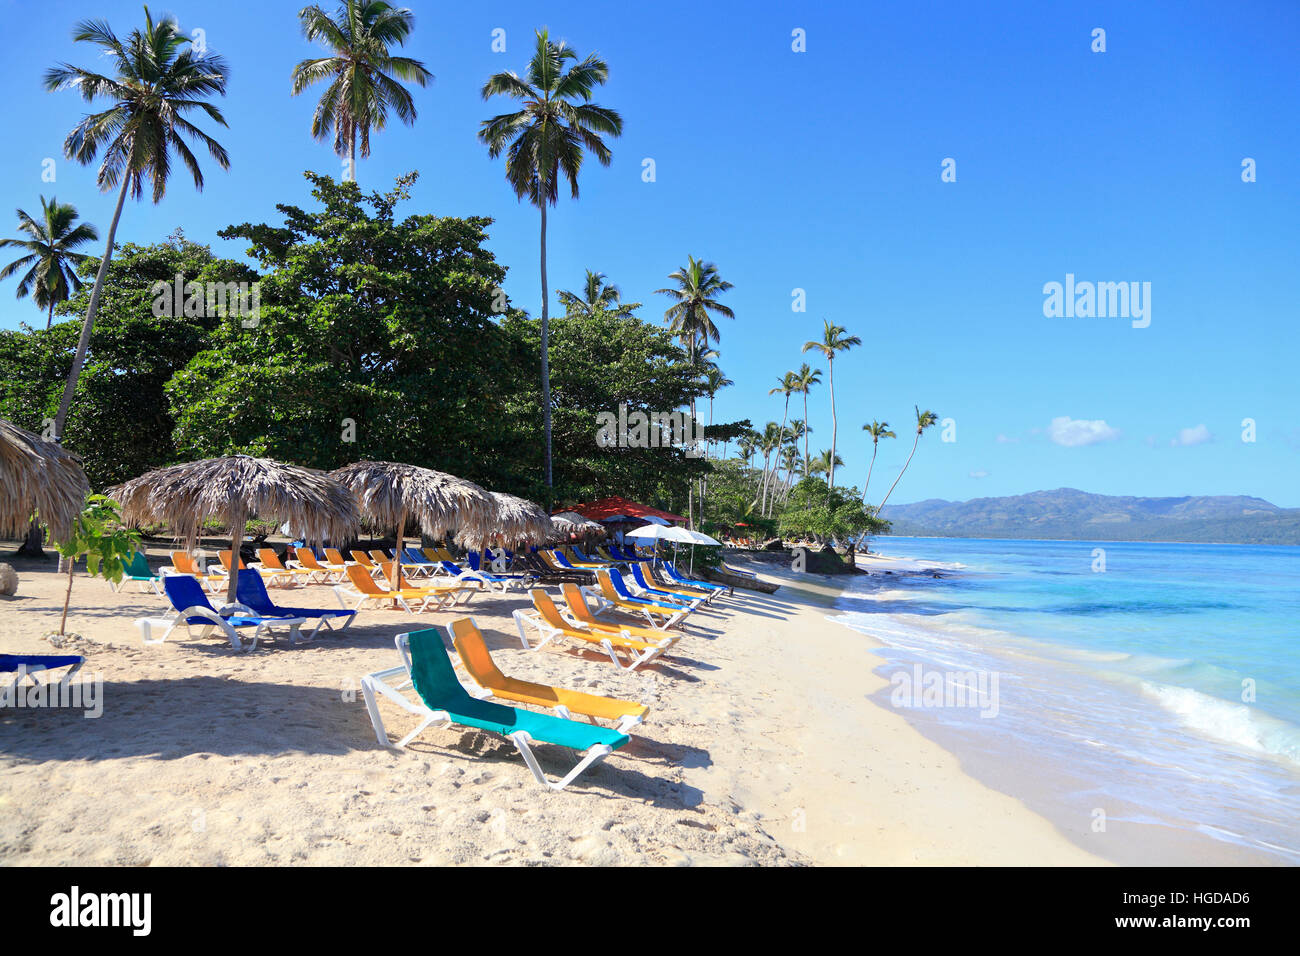 La Playta, beautiful tropical beach with white sand near las Galeras village, Dominican Republic Stock Photo